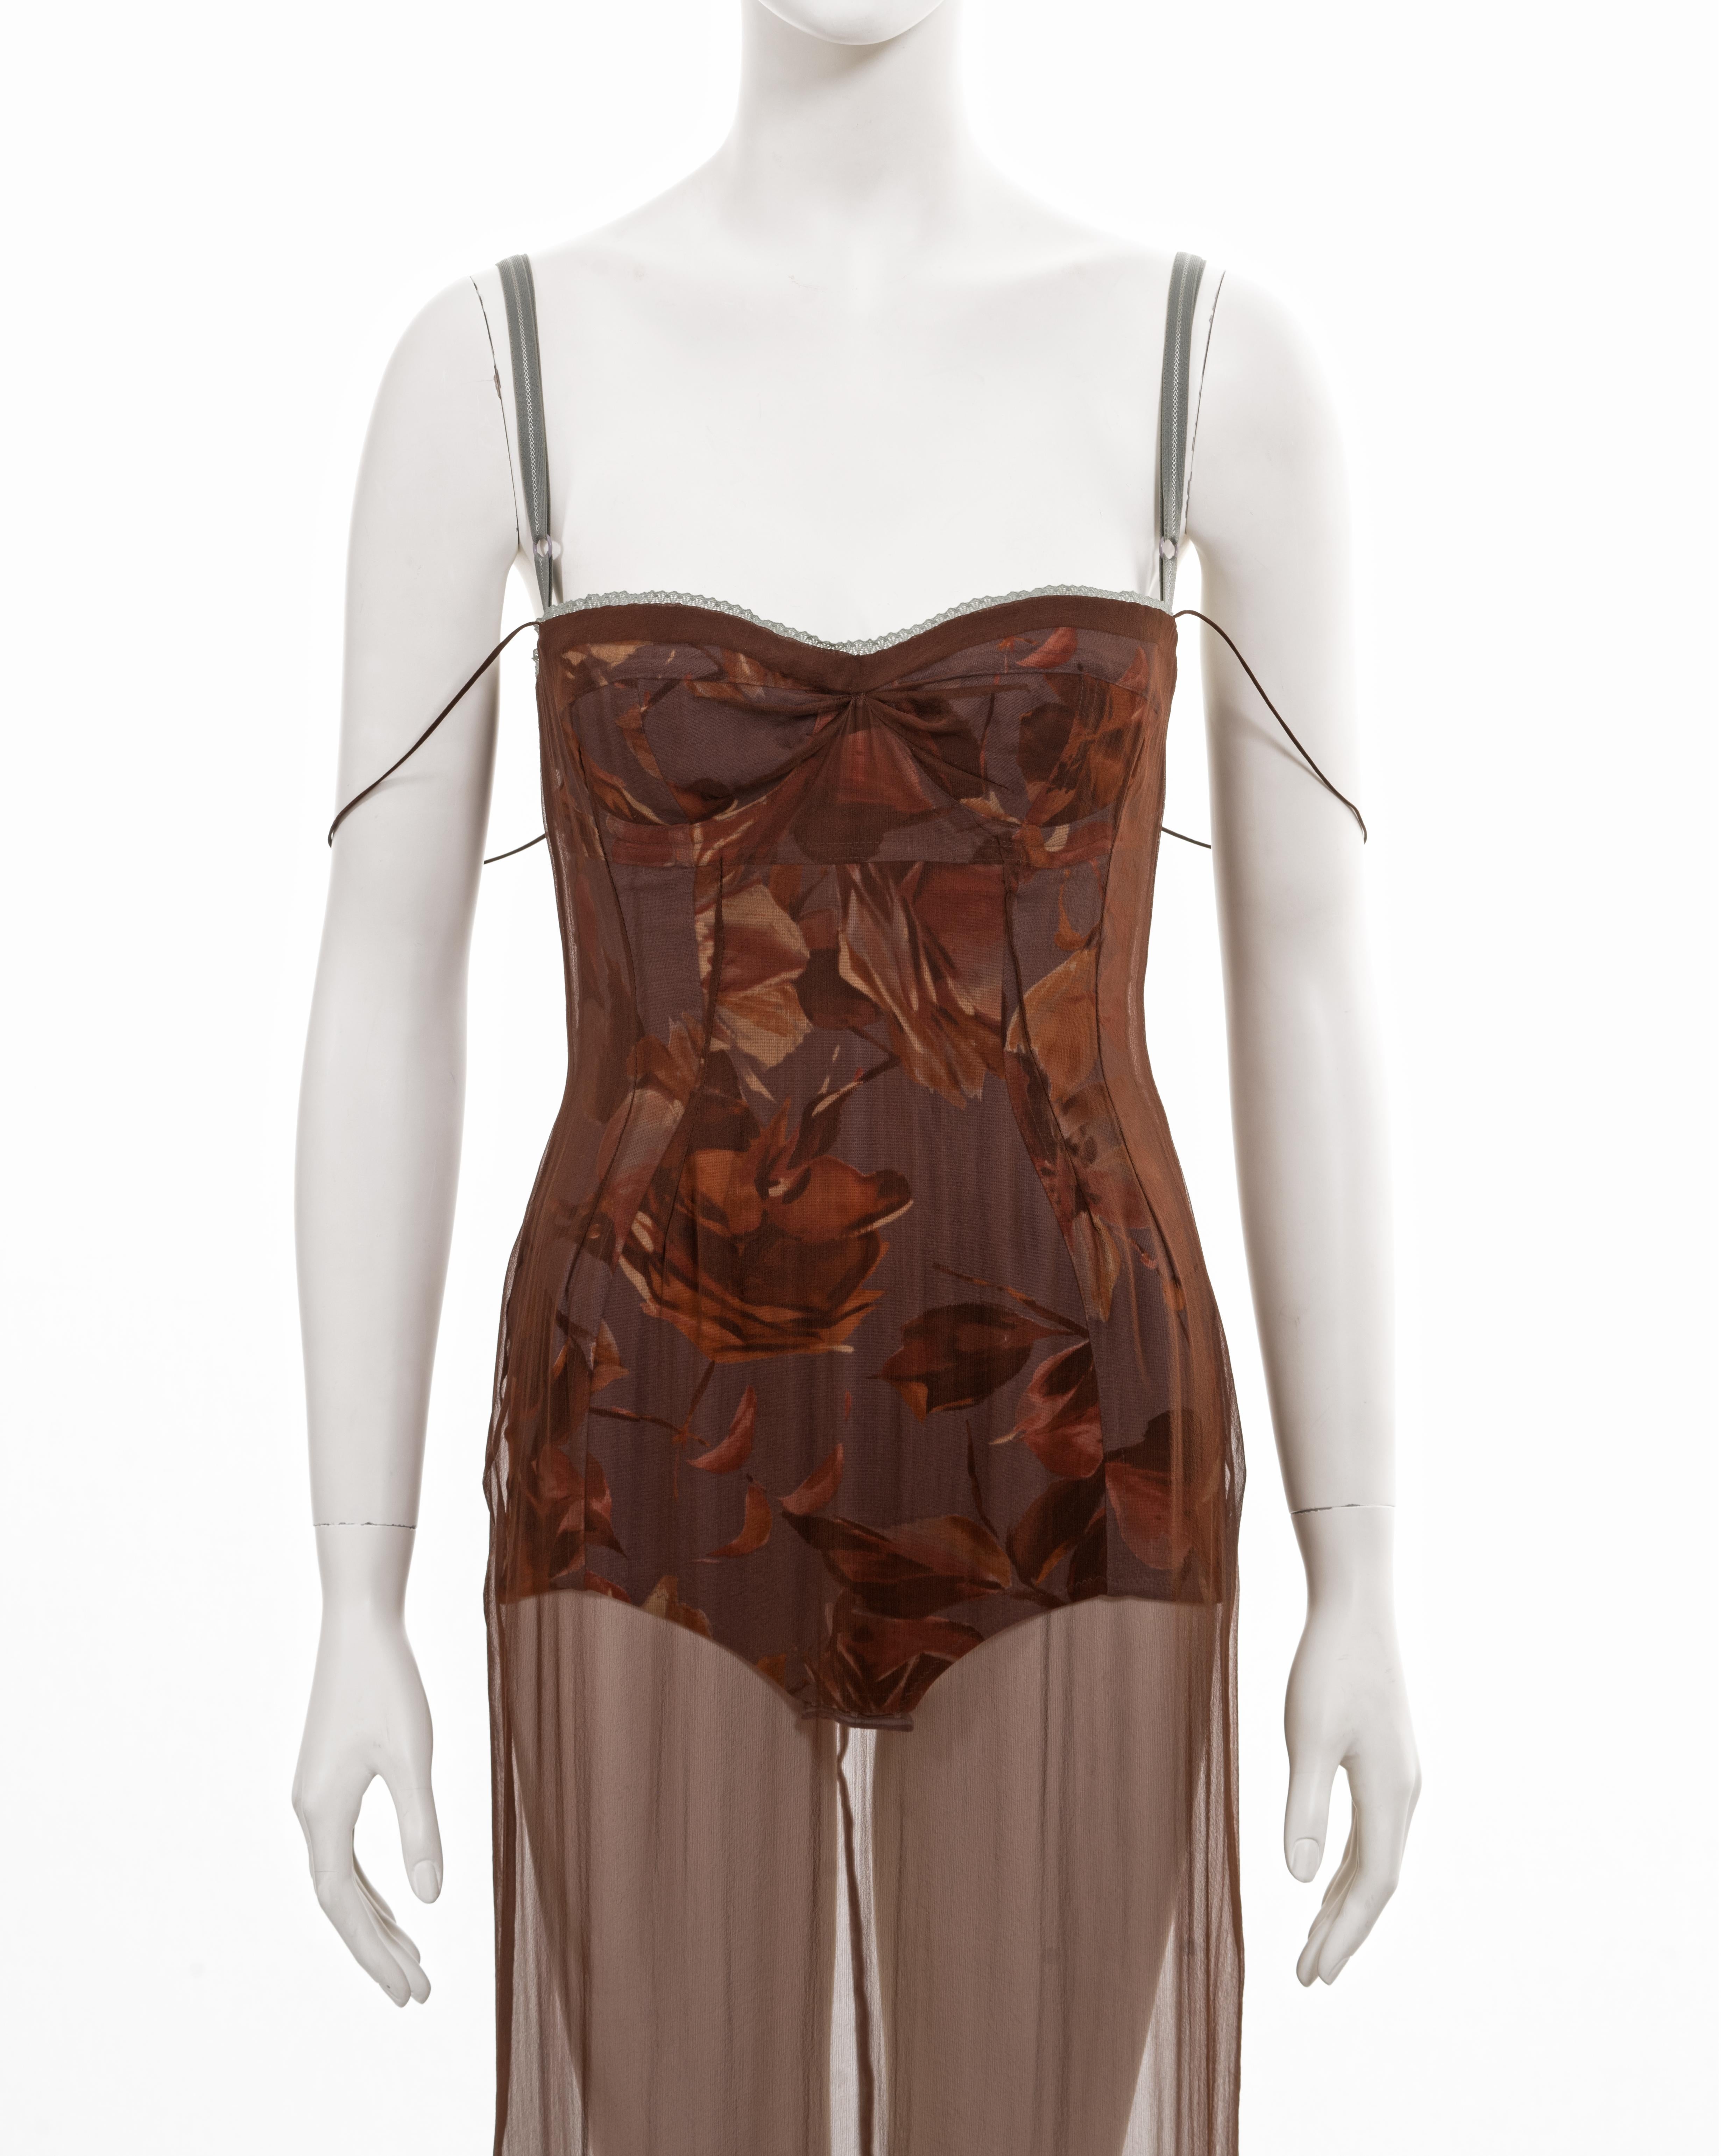 Women's Dolce & Gabbana brown silk chiffon evening dress with built-in bodysuit, ss 1997